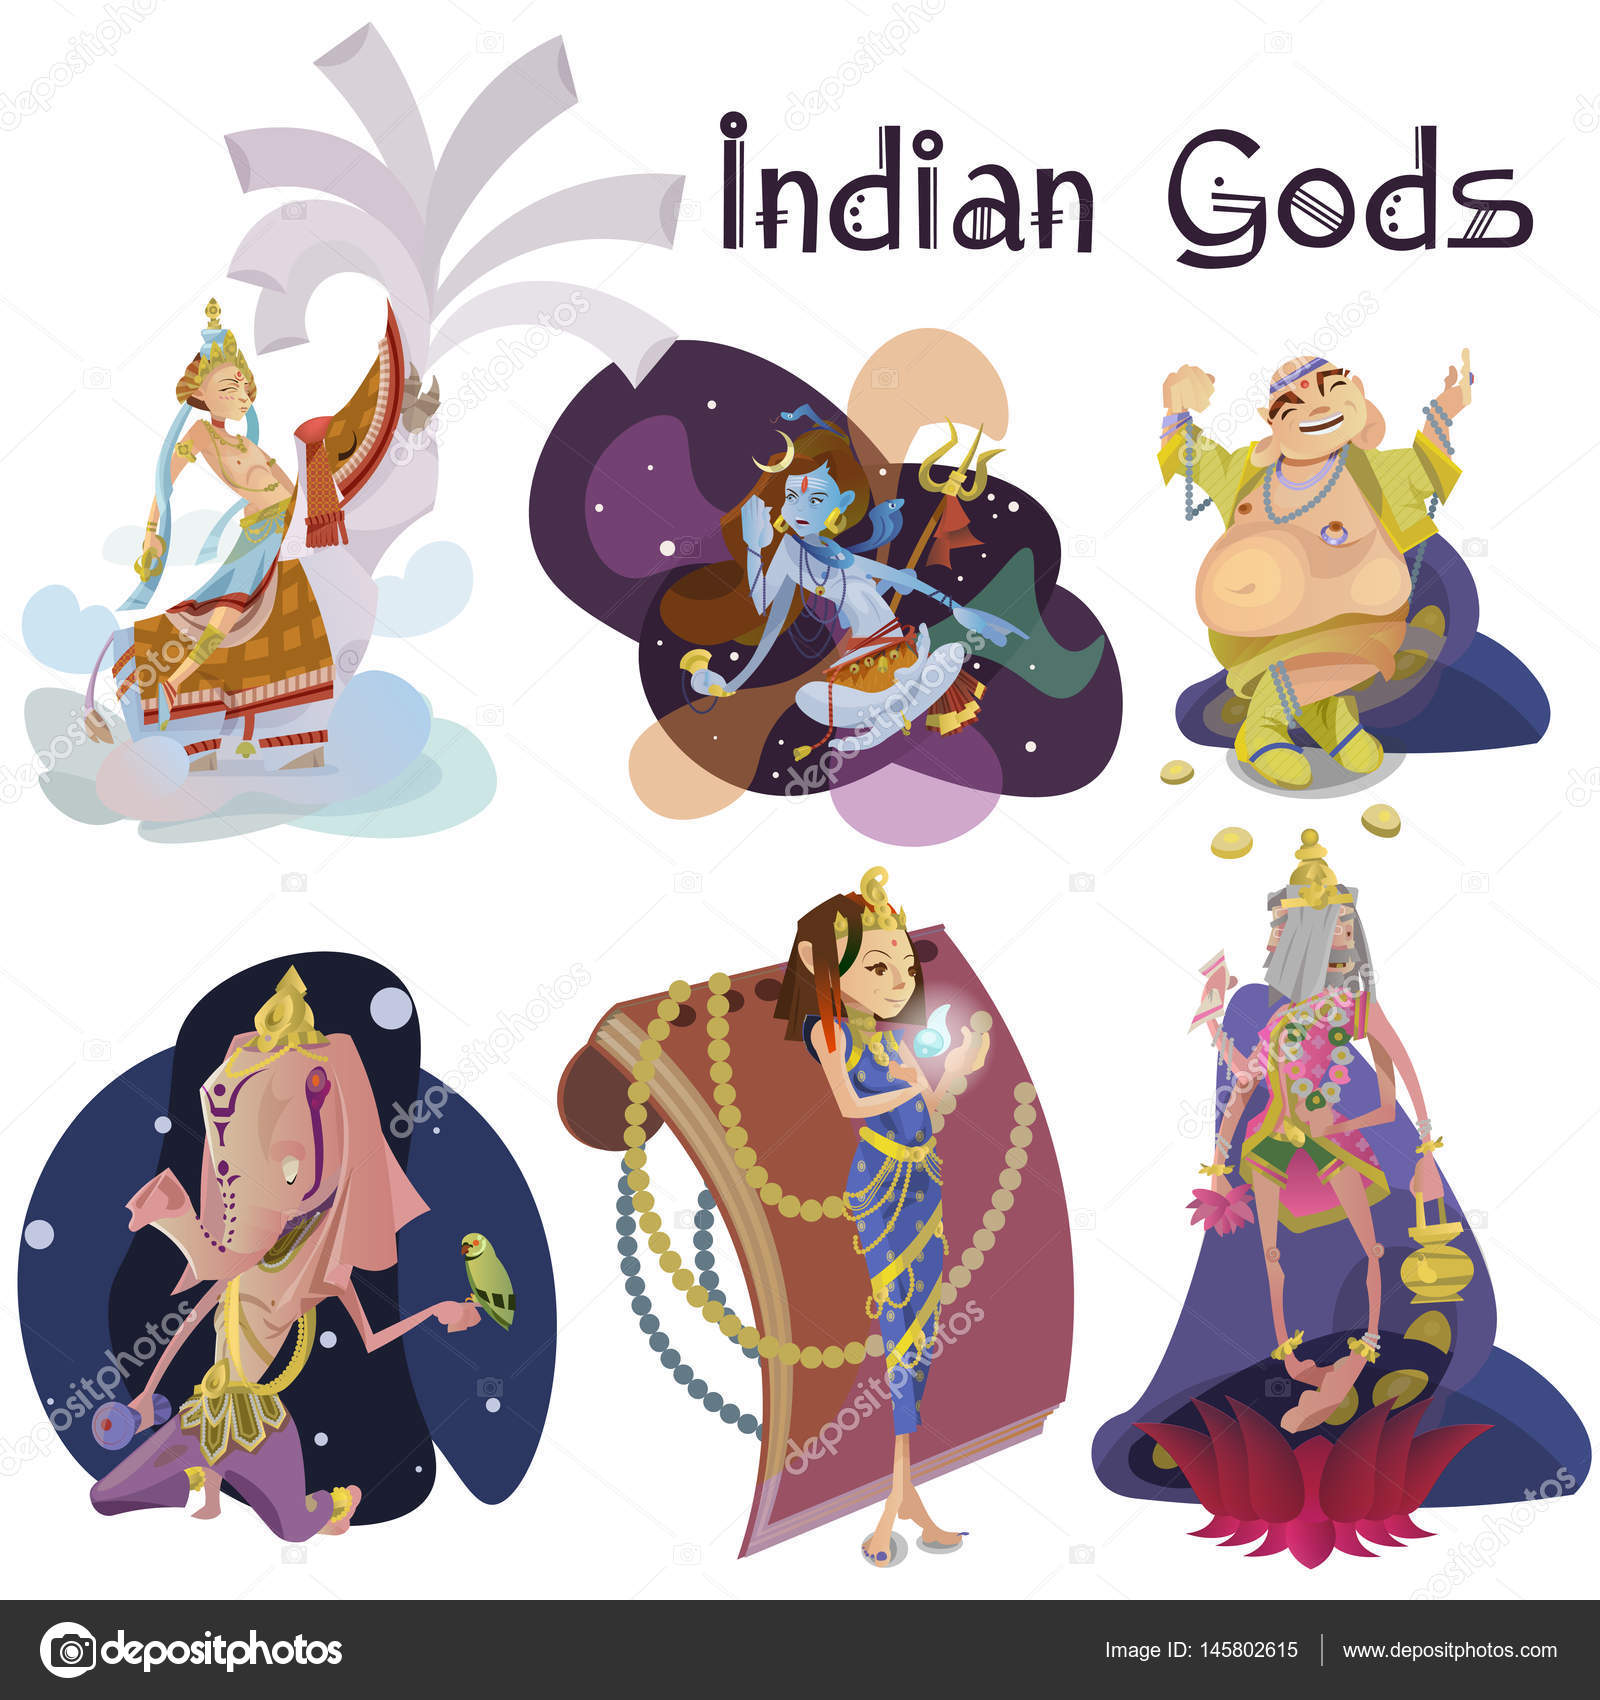 https://st3.depositphotos.com/5624982/14580/v/1600/depositphotos_145802615-stock-illustration-set-of-isolated-indian-gods.jpg